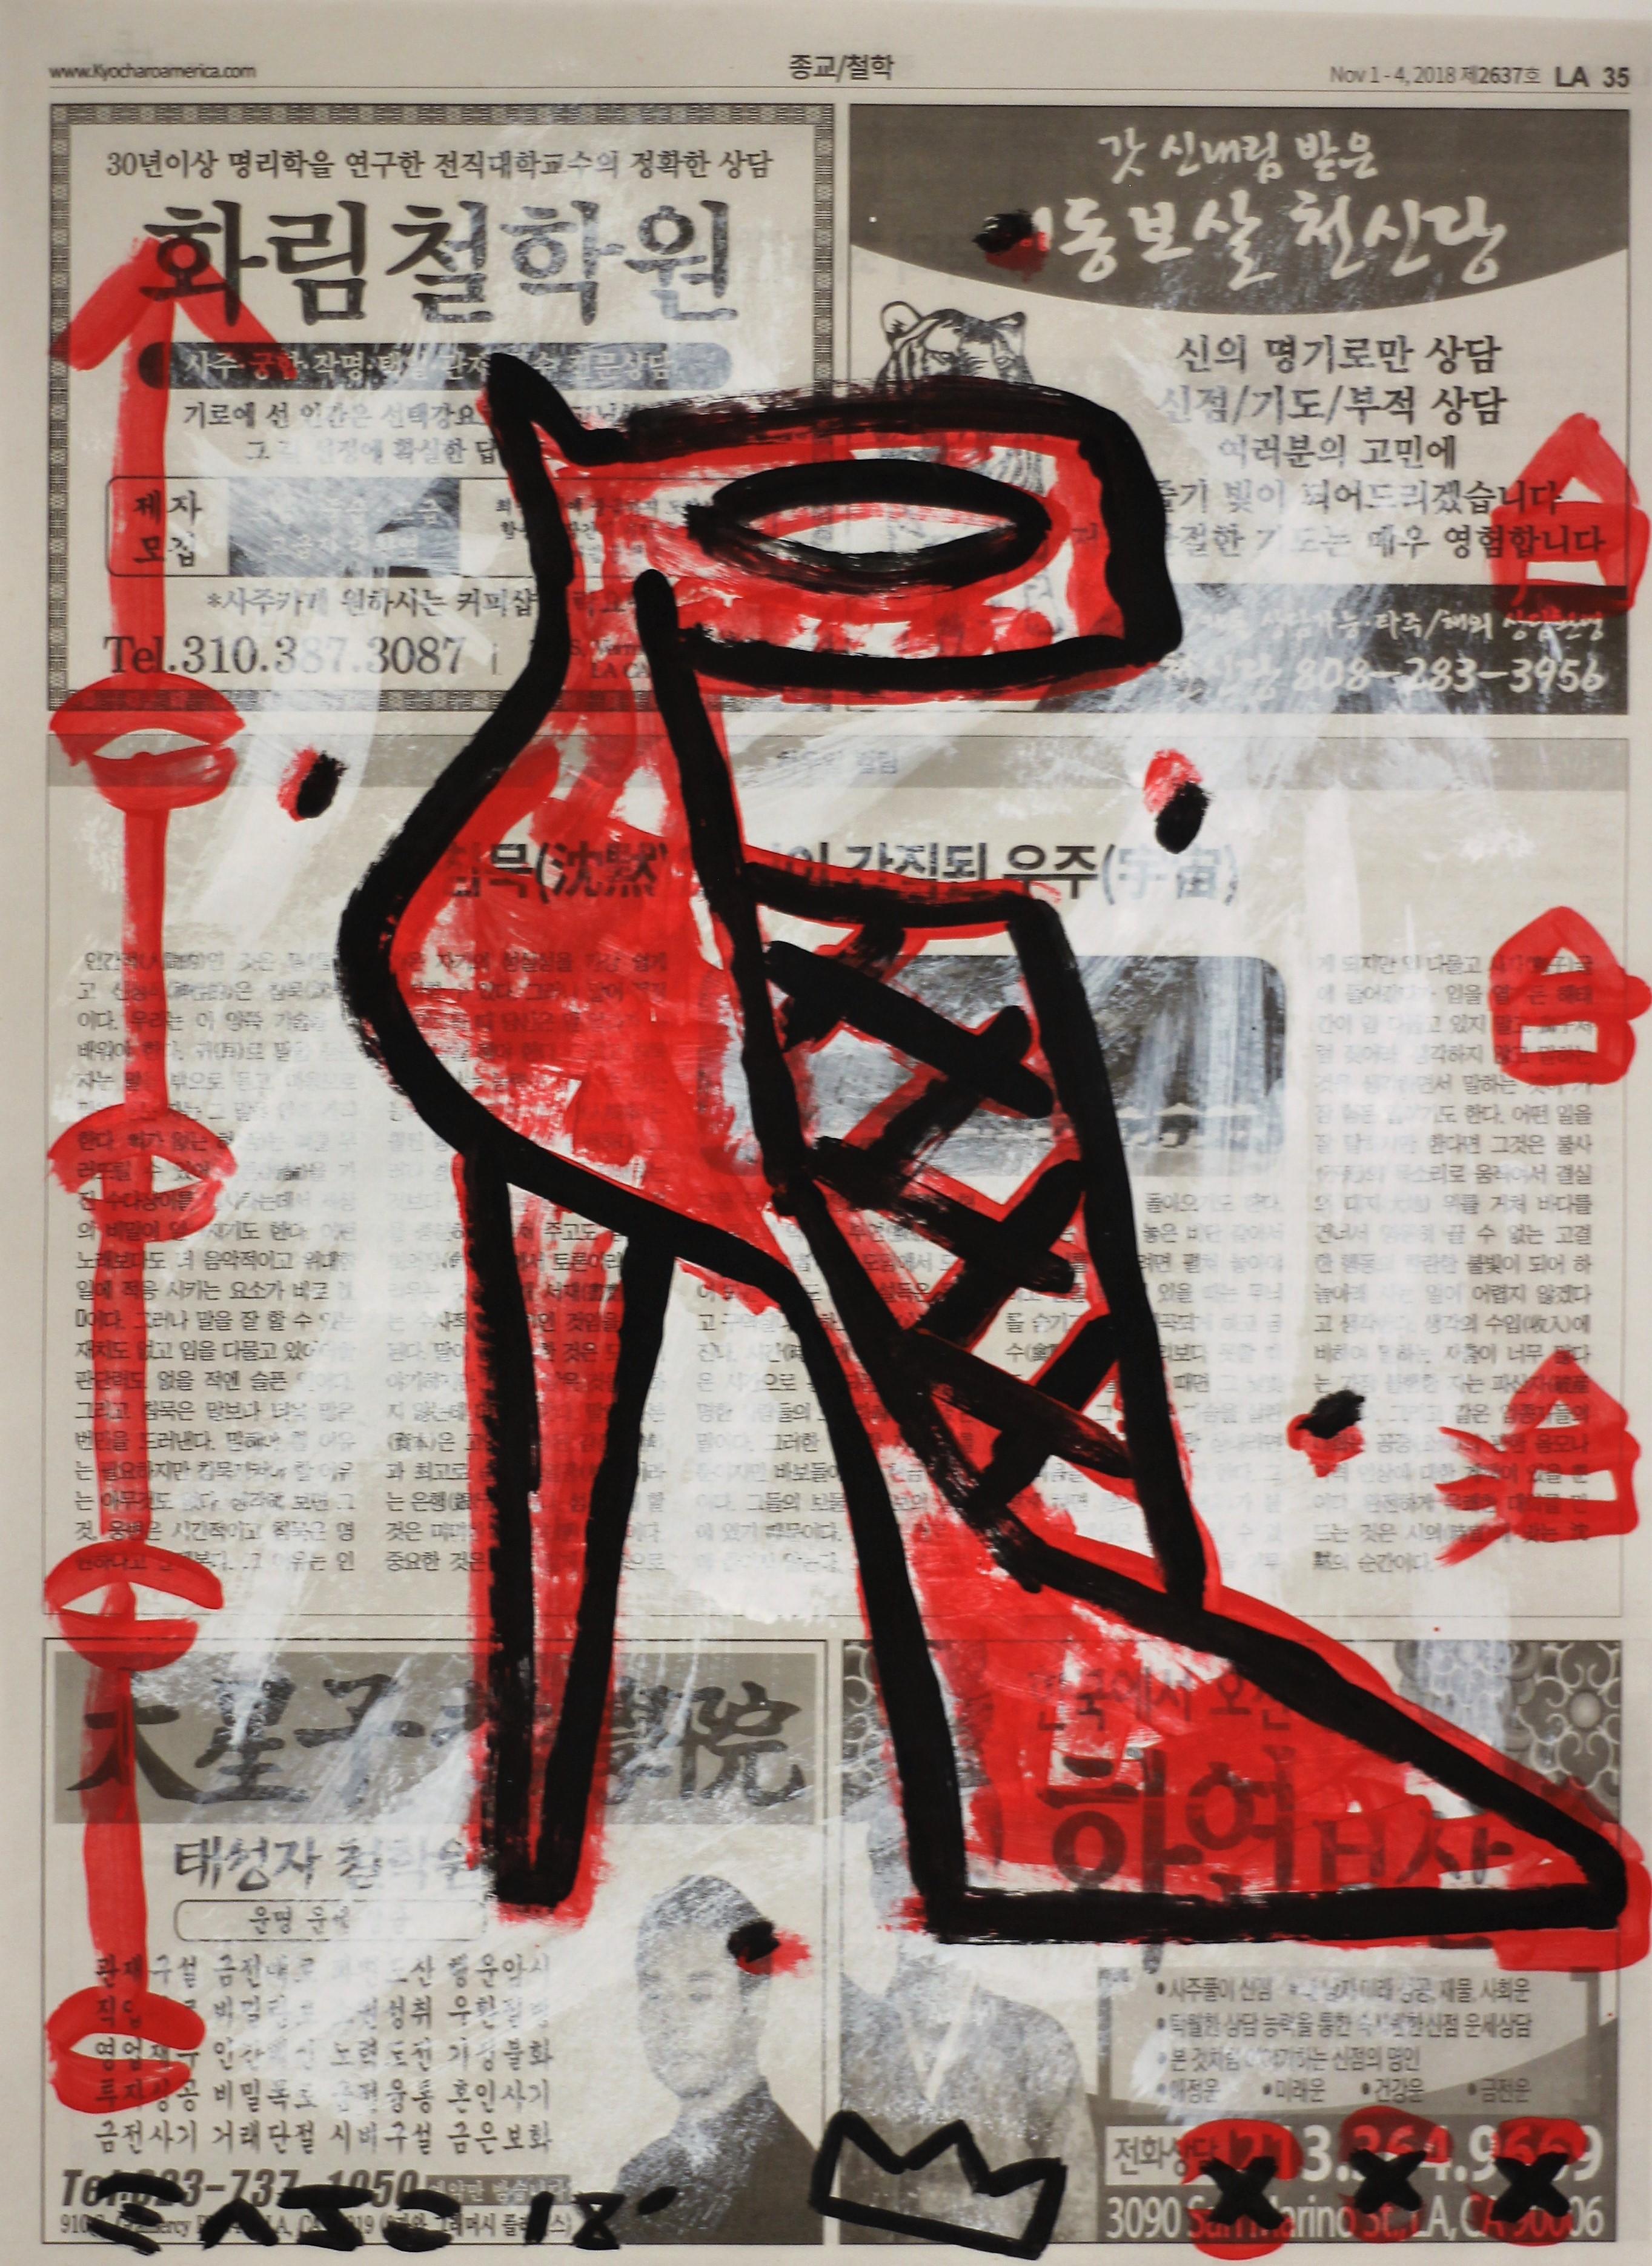 Gary John Figurative Painting - My Dream Shoe - Black and Red Stiletto Original Street Art on Newsprint